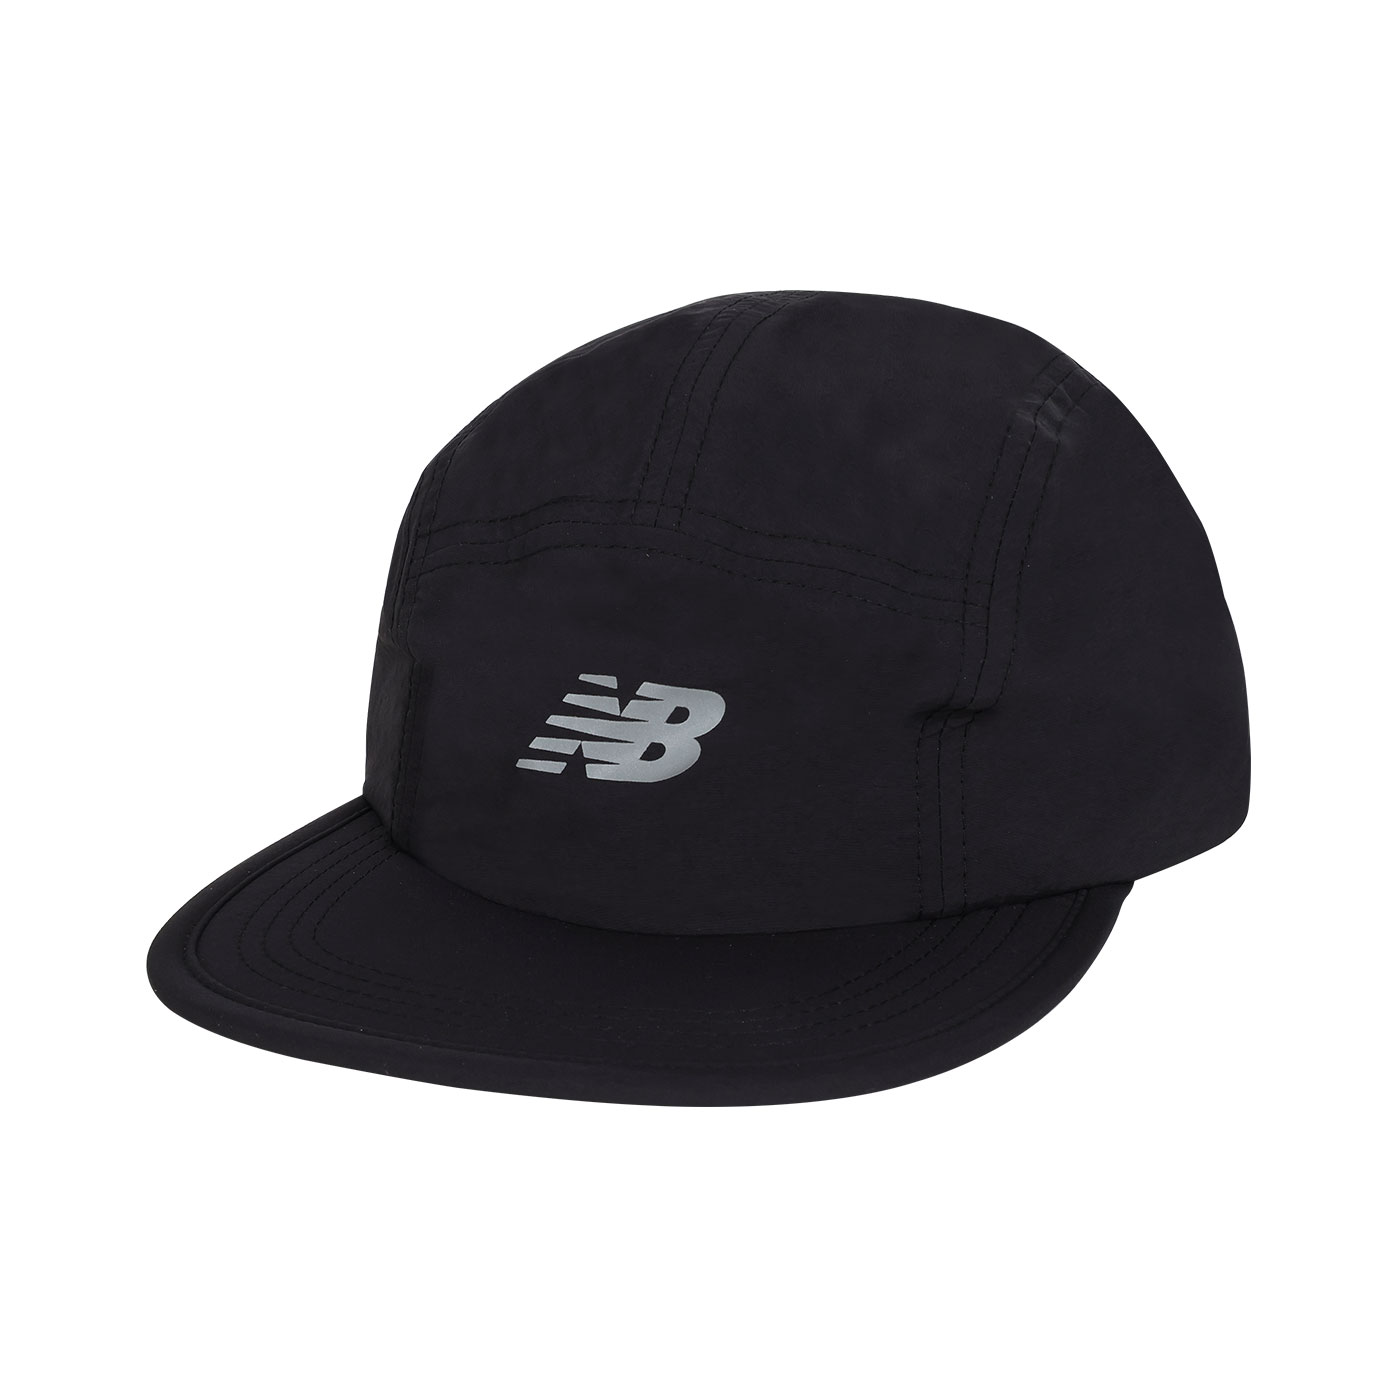 NEW BALANCE 運動帽  LAH41003BK - 黑灰